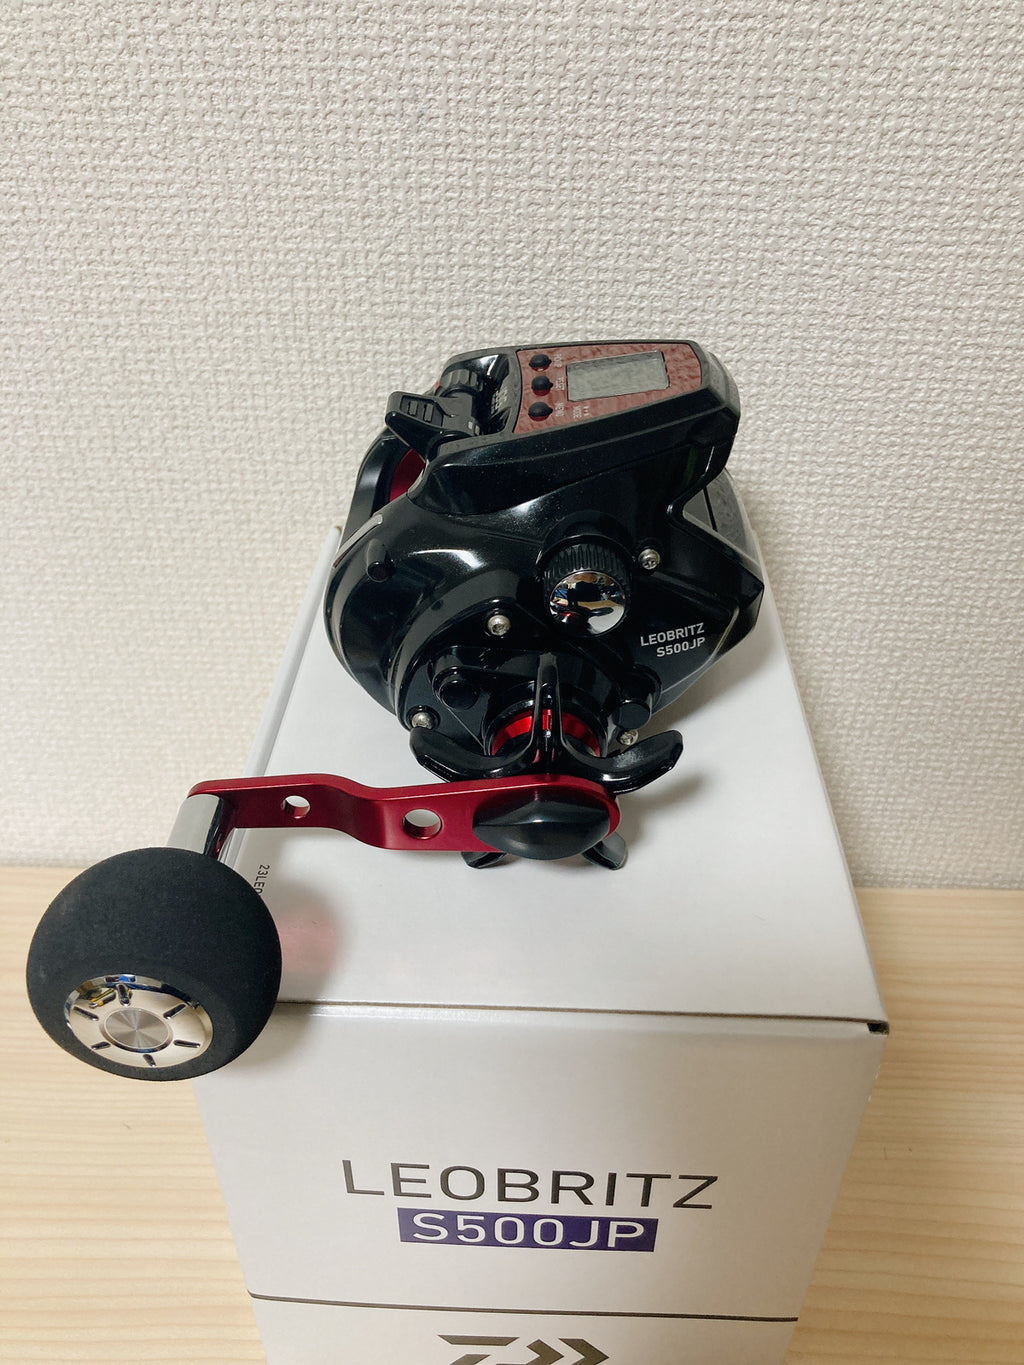 Daiwa S500JP 23 Leo Blitz High-Power Electric Fishing Reel - Bass